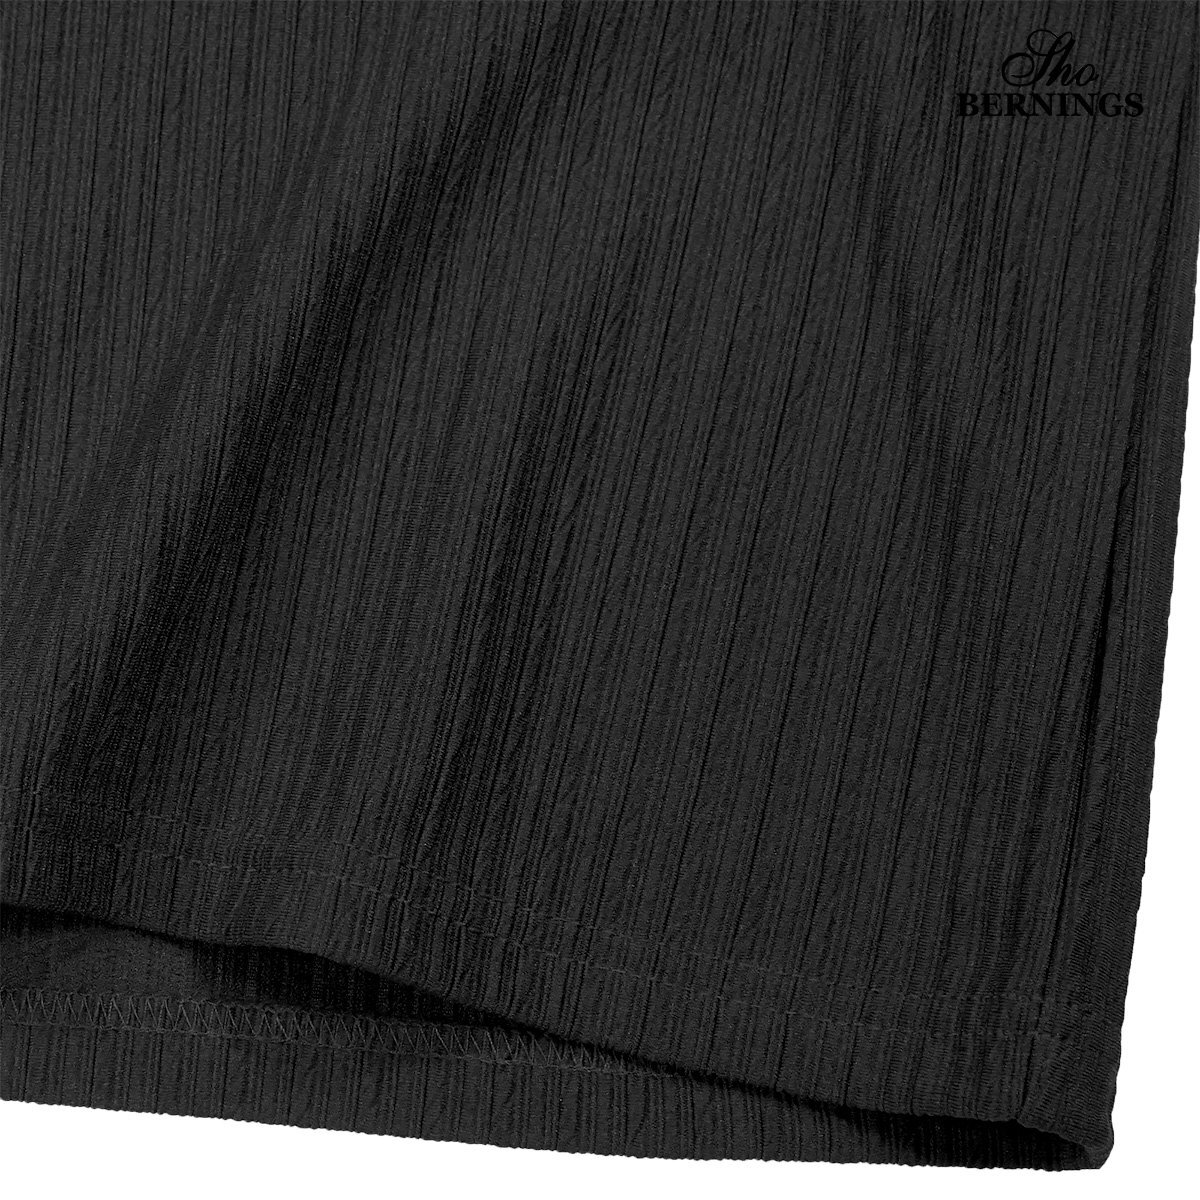 317932-90 Bernings sho Tシャツ Vネック ストライプ織柄 ジャガード メンズ シンプル 半袖 (ブラック黒) L カットソー トップス タイト_画像6